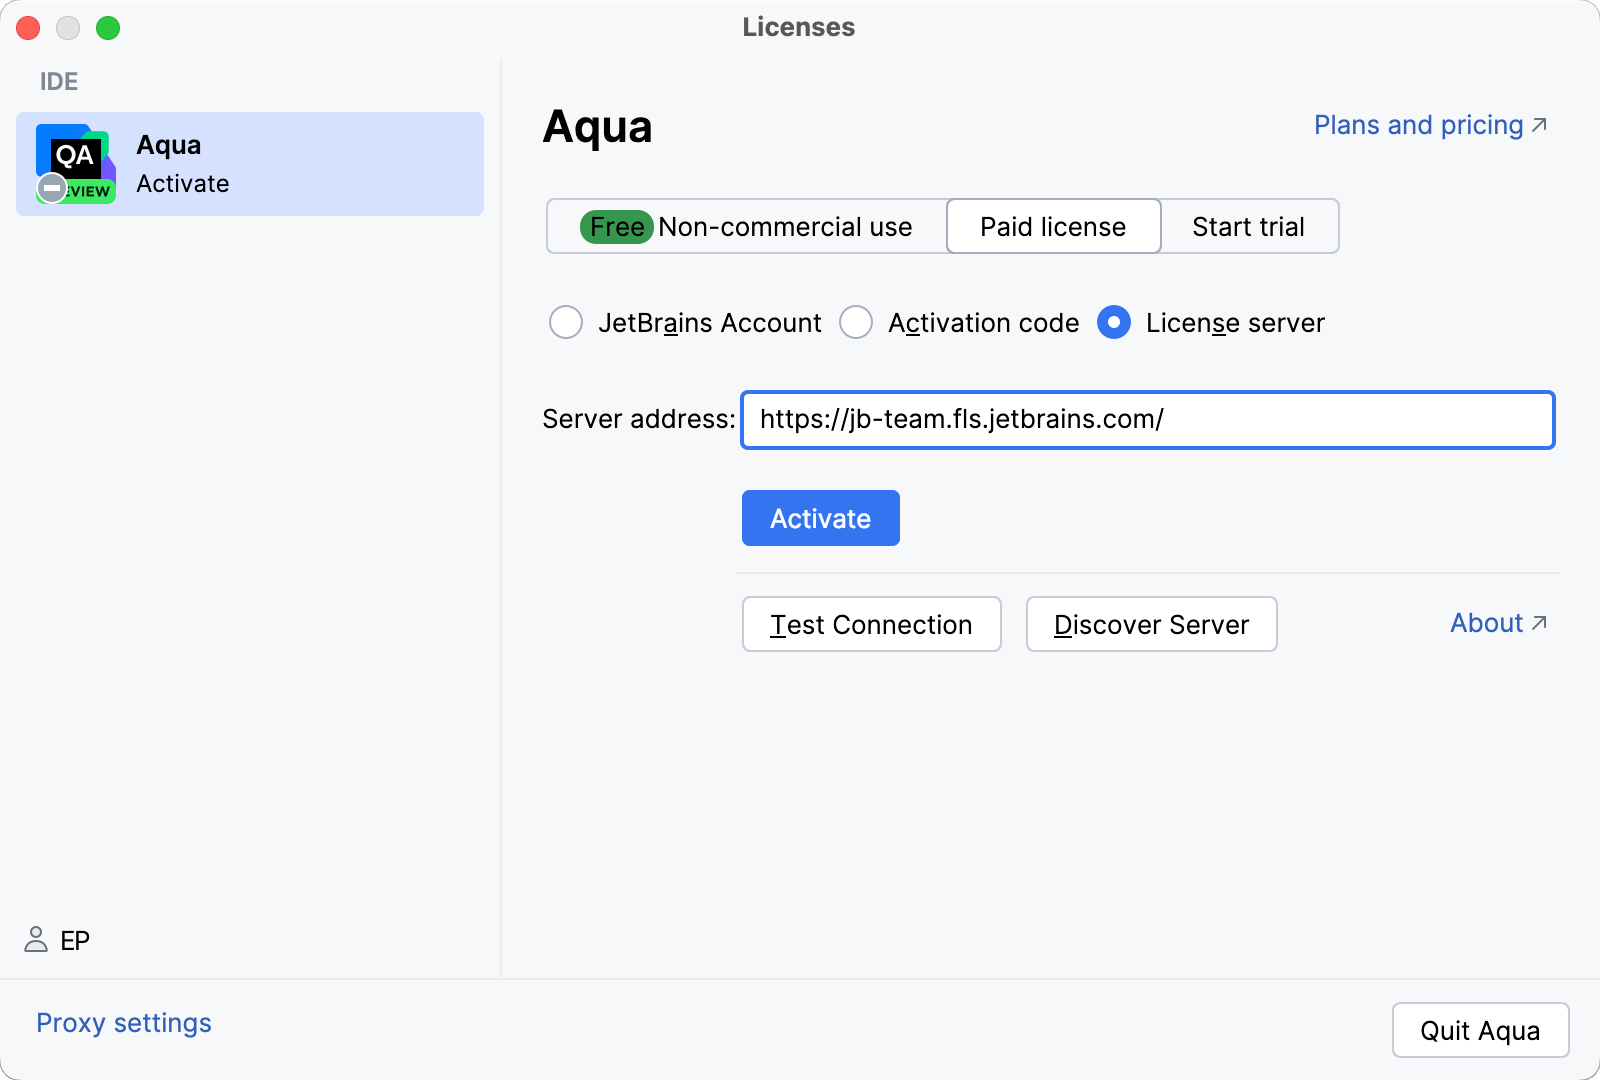 Activate Aqua license with a license server